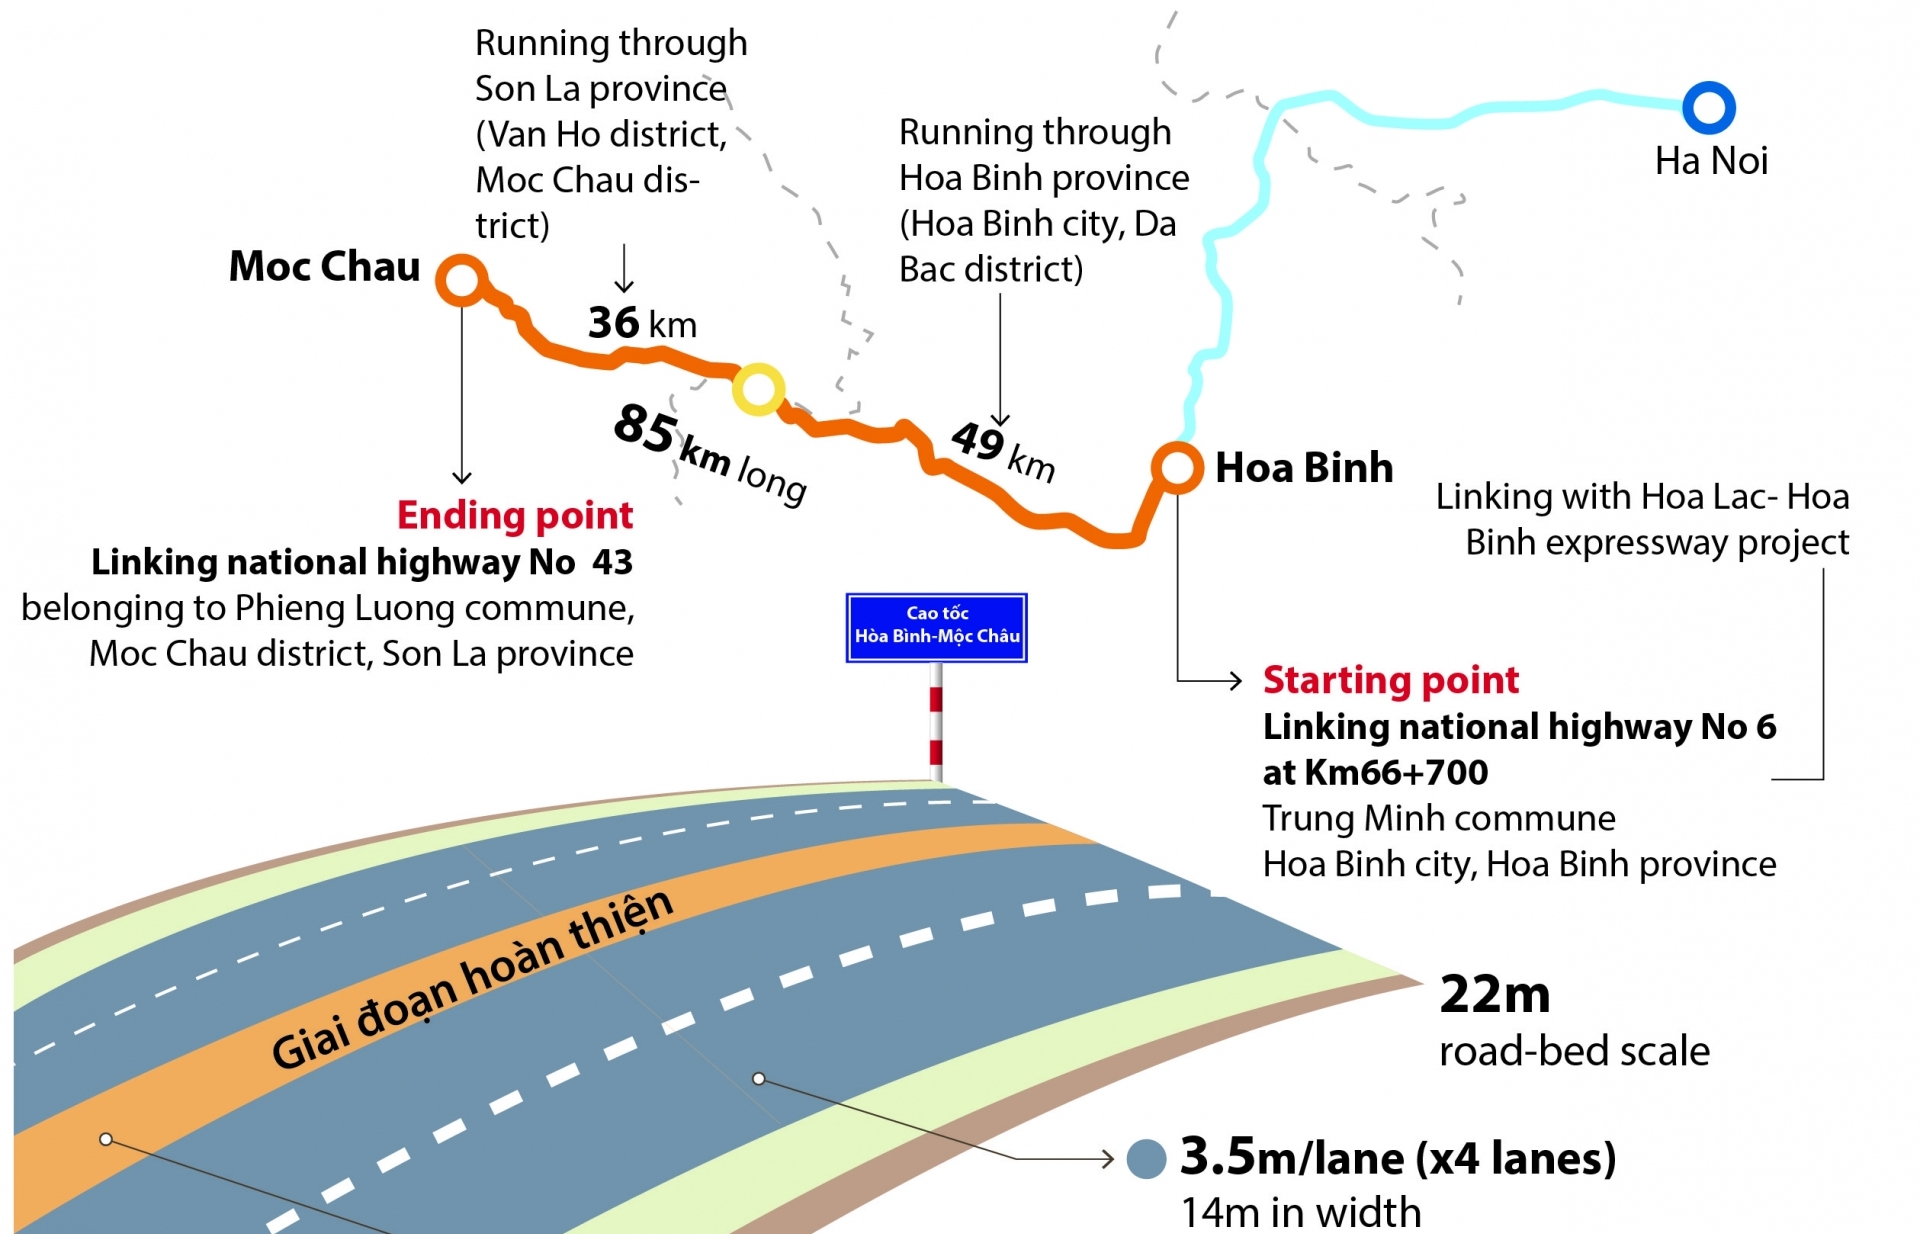 941 mln USD set to build Hoa Binh- Moc Chau expressway